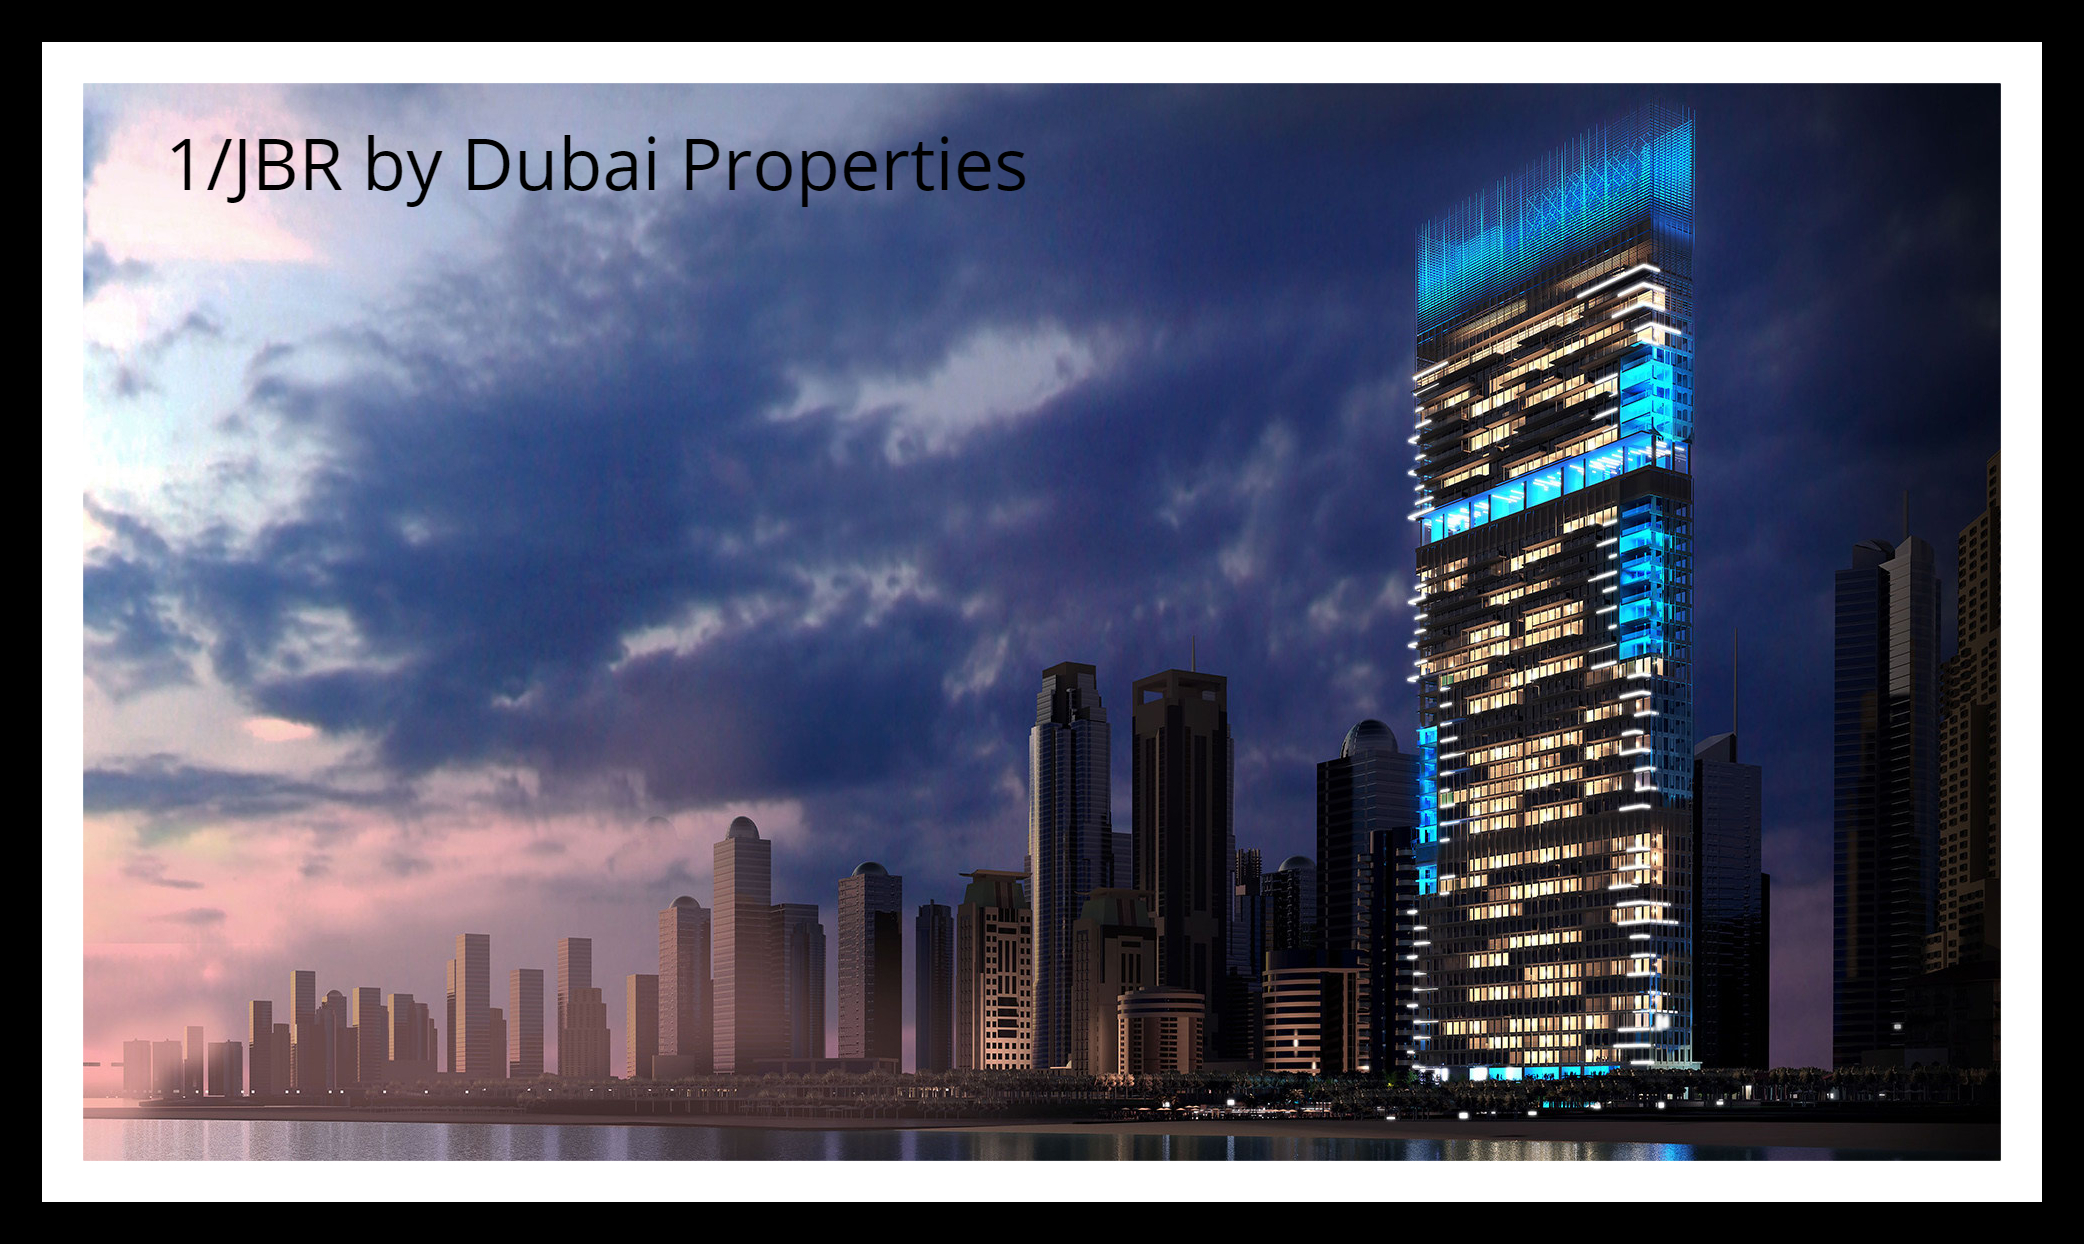 1JBR by Dubai Properties